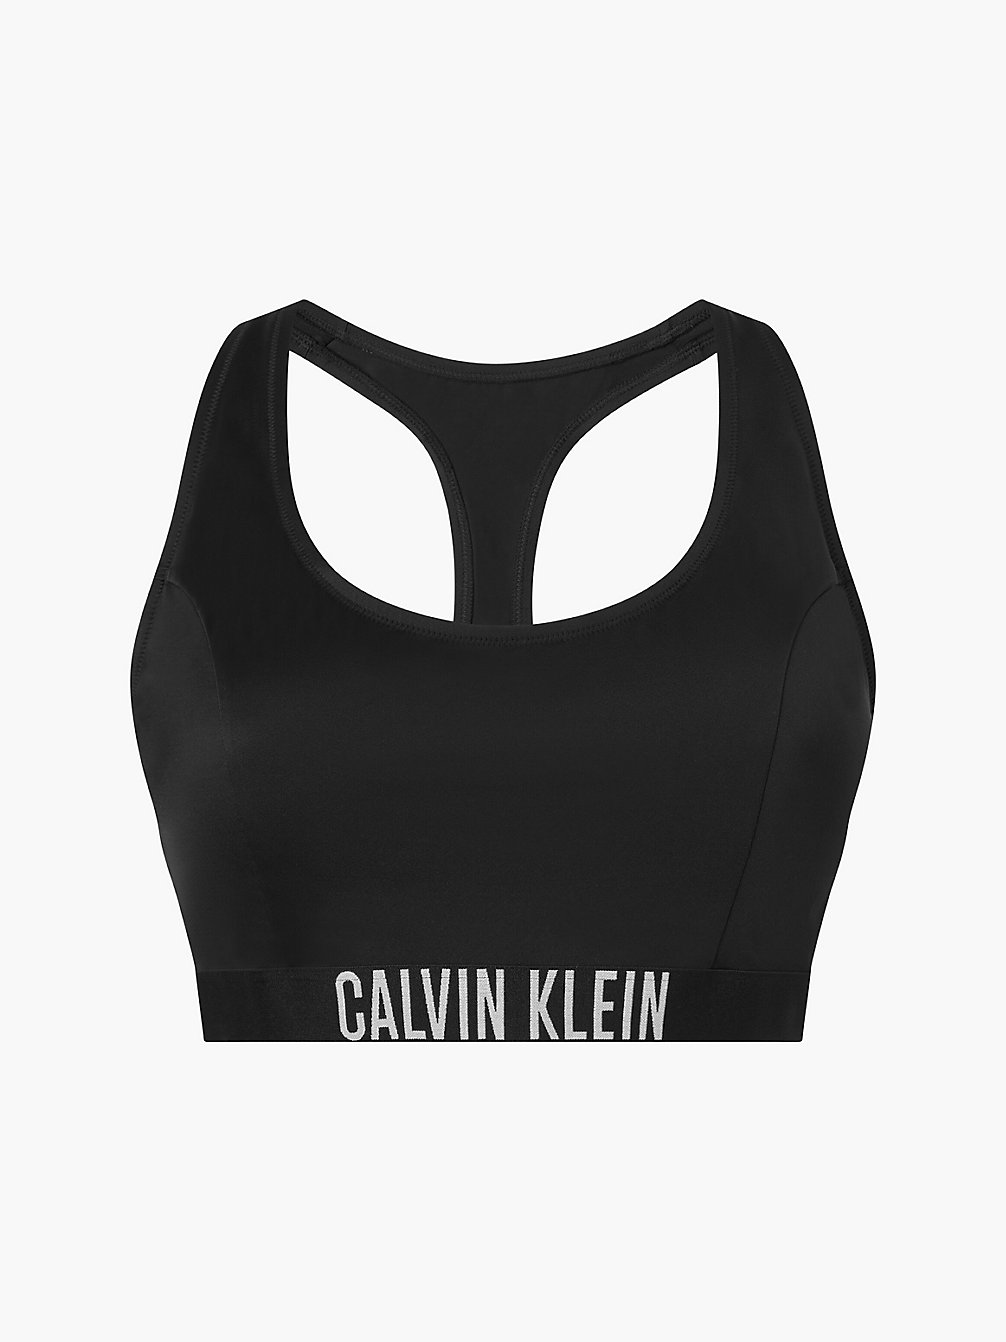 PVH BLACK Plus Size Bralette Bikini Top - Intense Power undefined women Calvin Klein